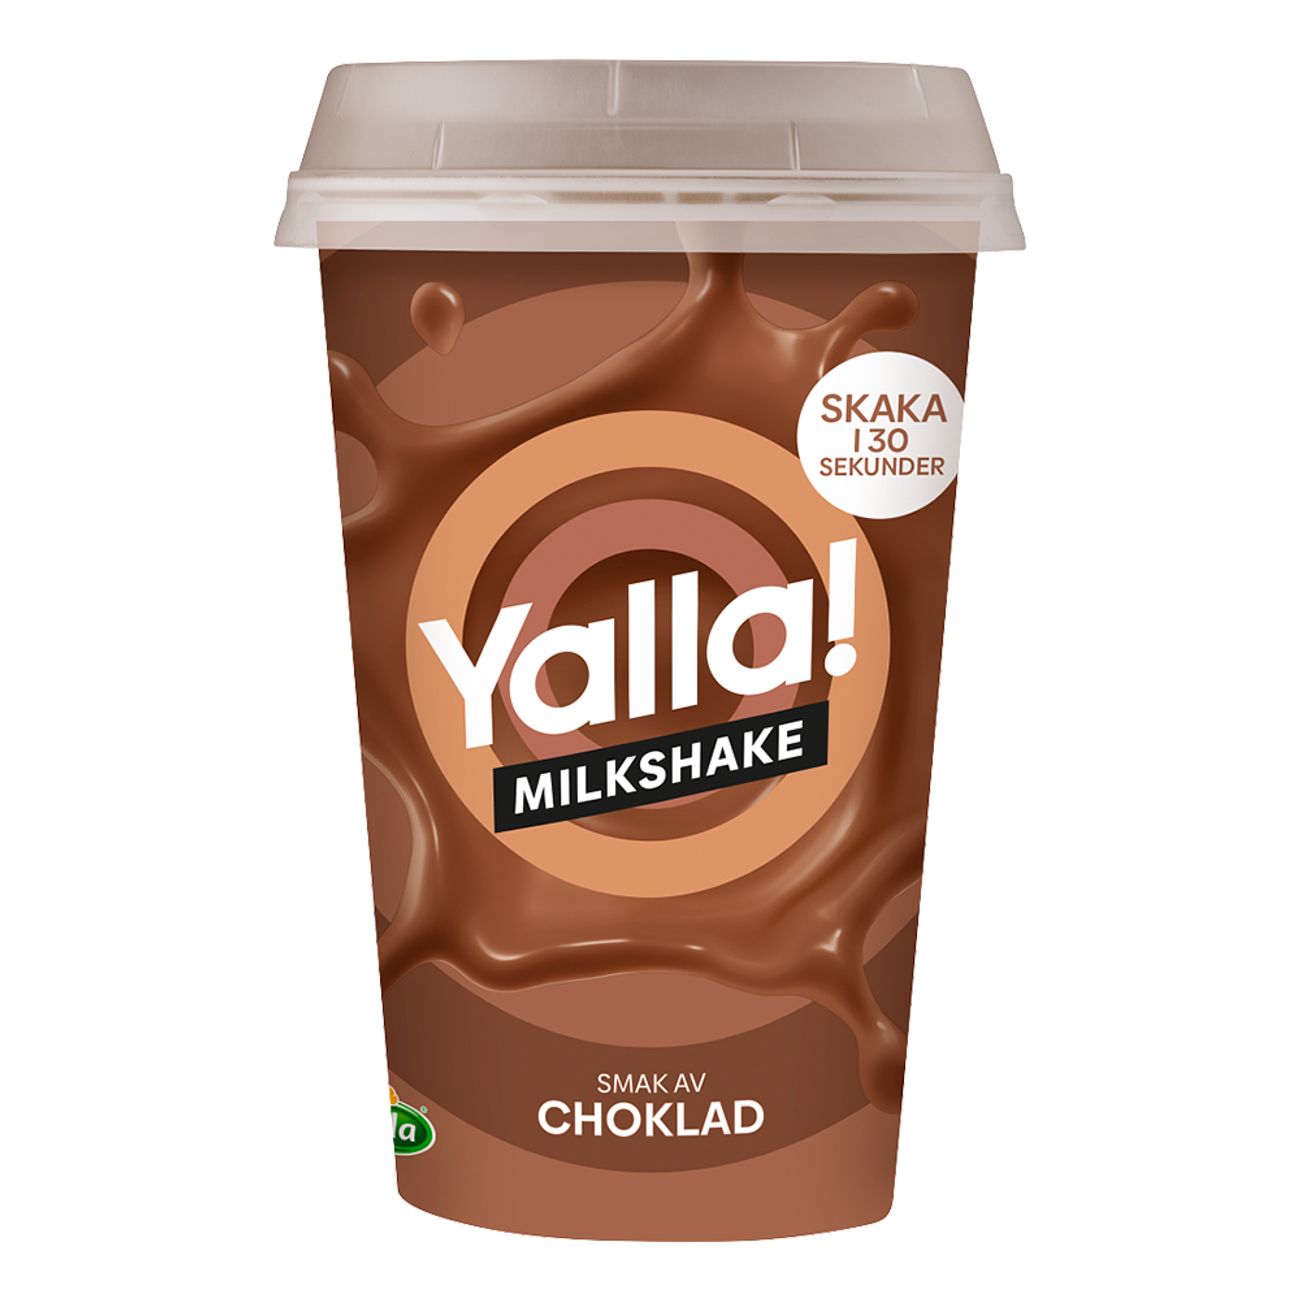 yalla-milkshake-choklad-90462-1